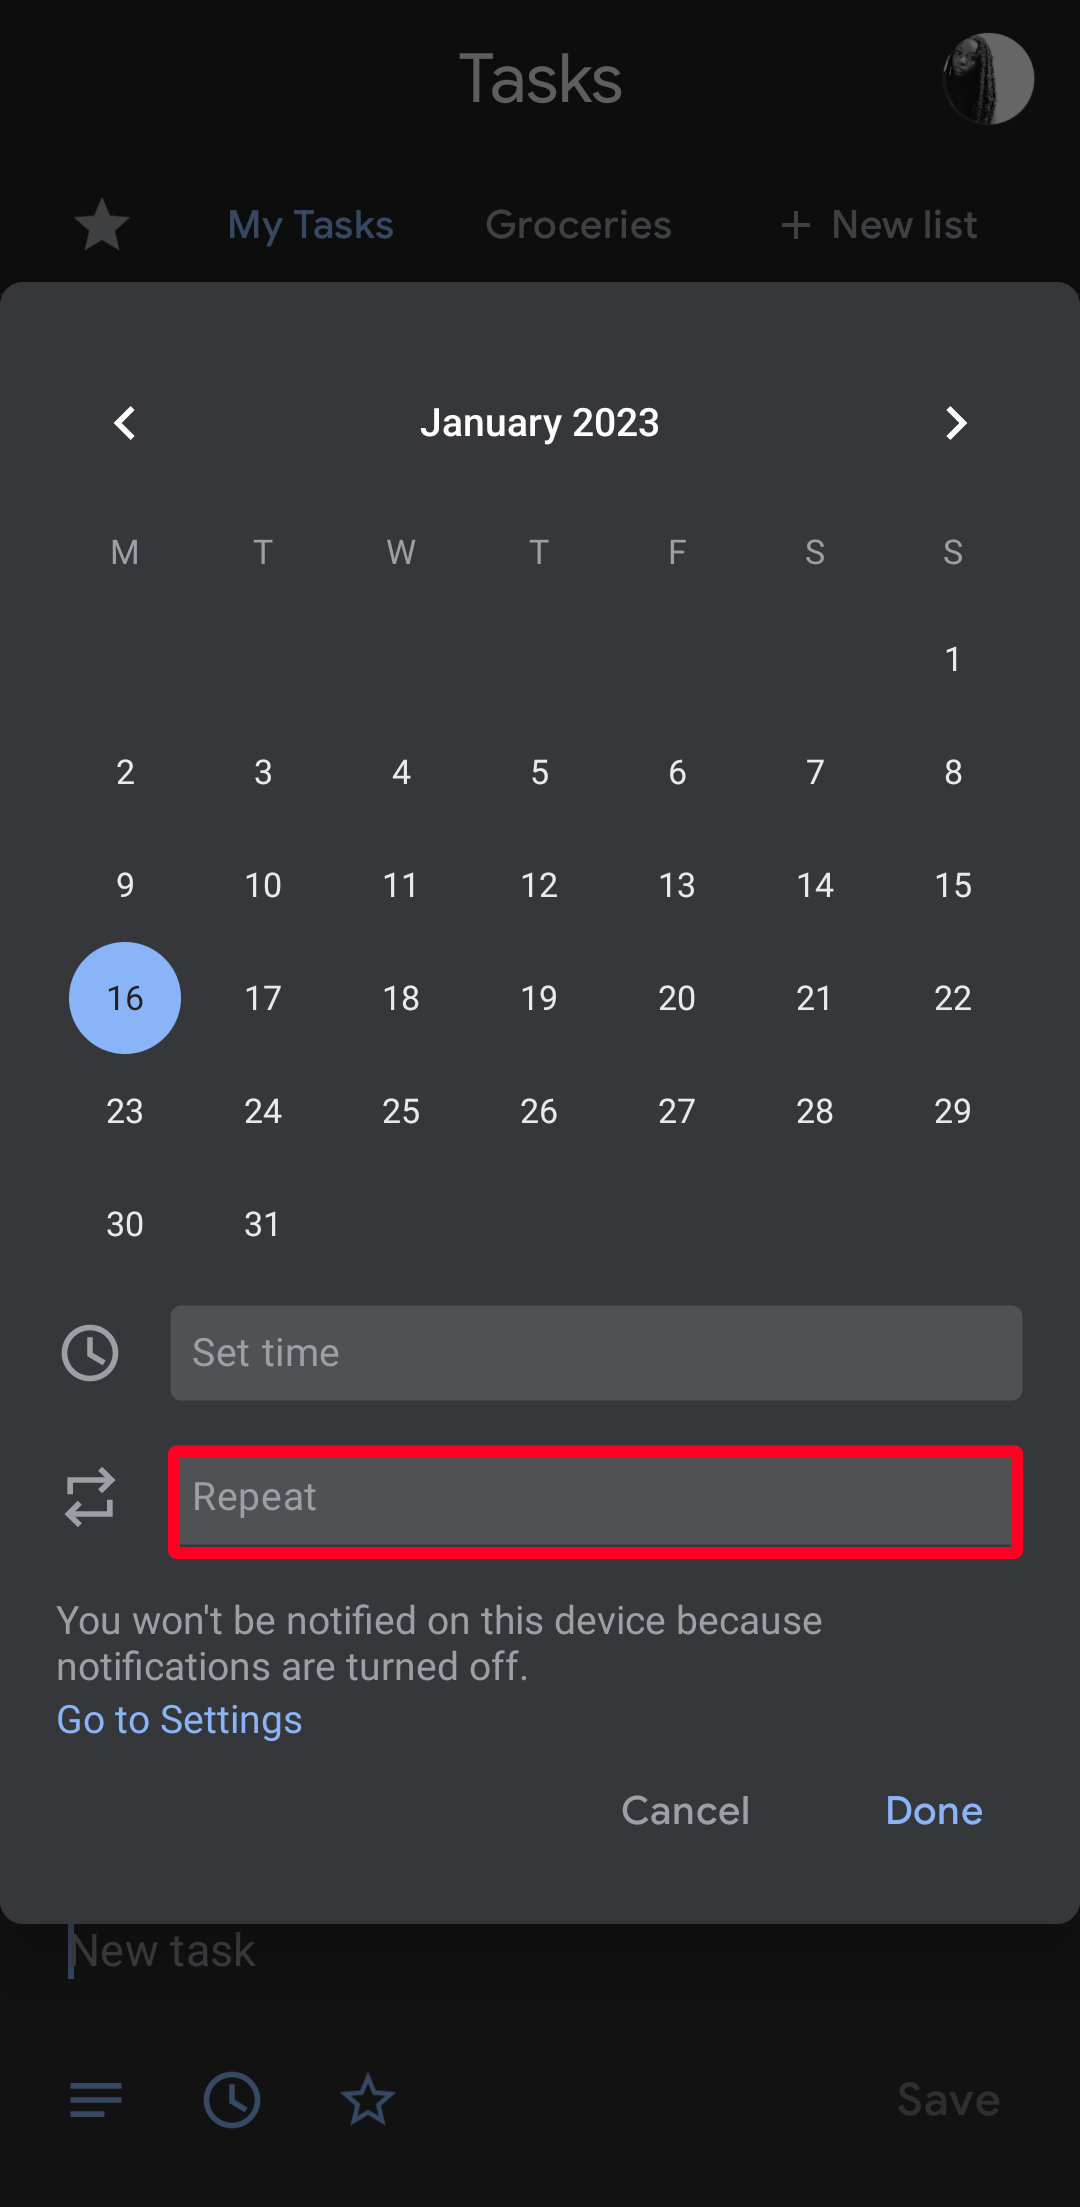 Repeat option in Google Tasks mobile app